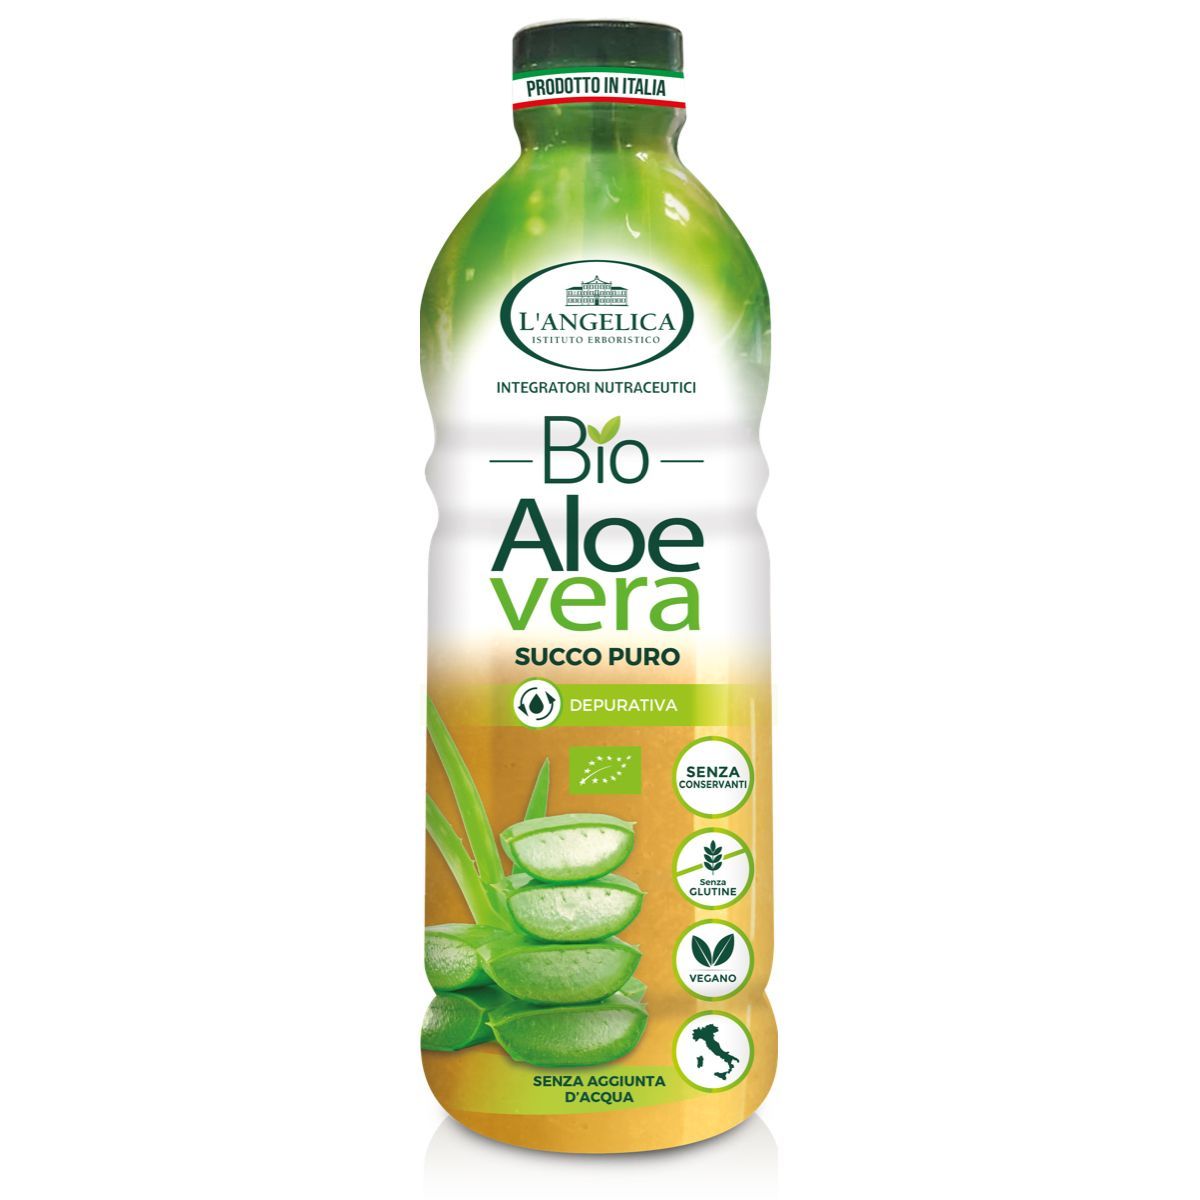 Organic Aloe Vera in Pure Juice - Supplement